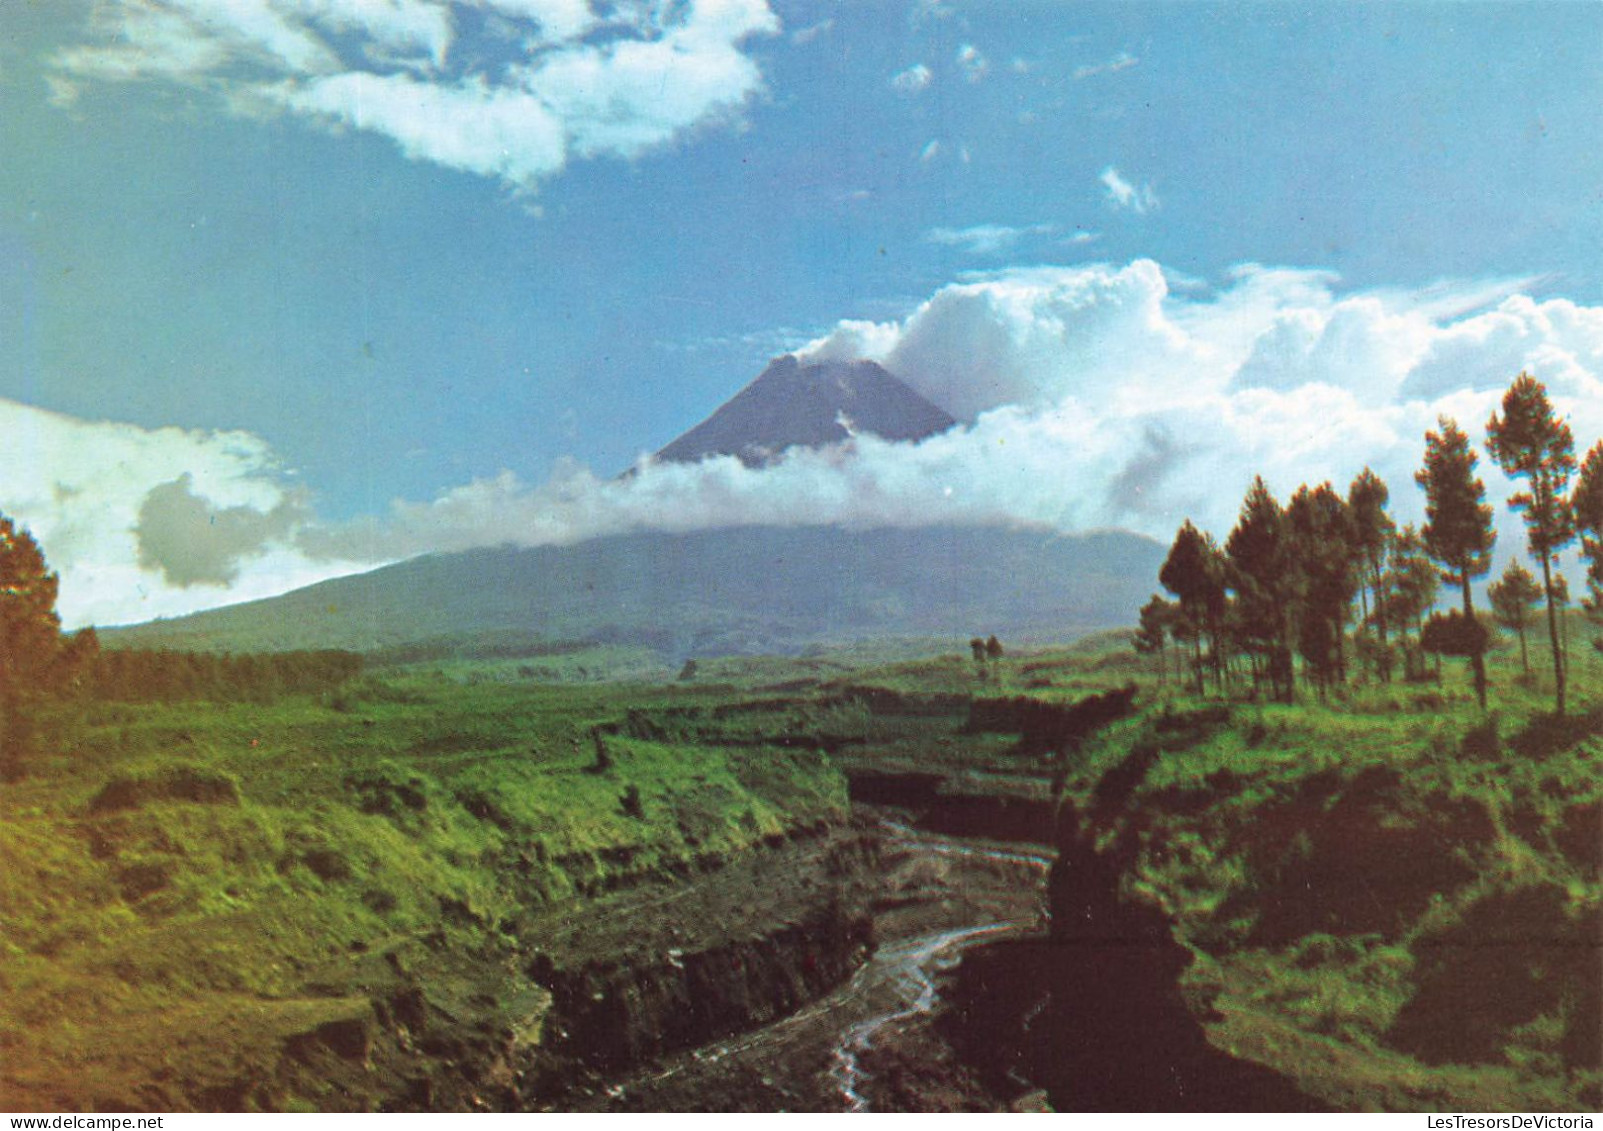 INDONESIE - A View Of The Merapi Volcano From Jurang Jero Near Yogyakarta - Indonesia - Carte Postale - Indonesia